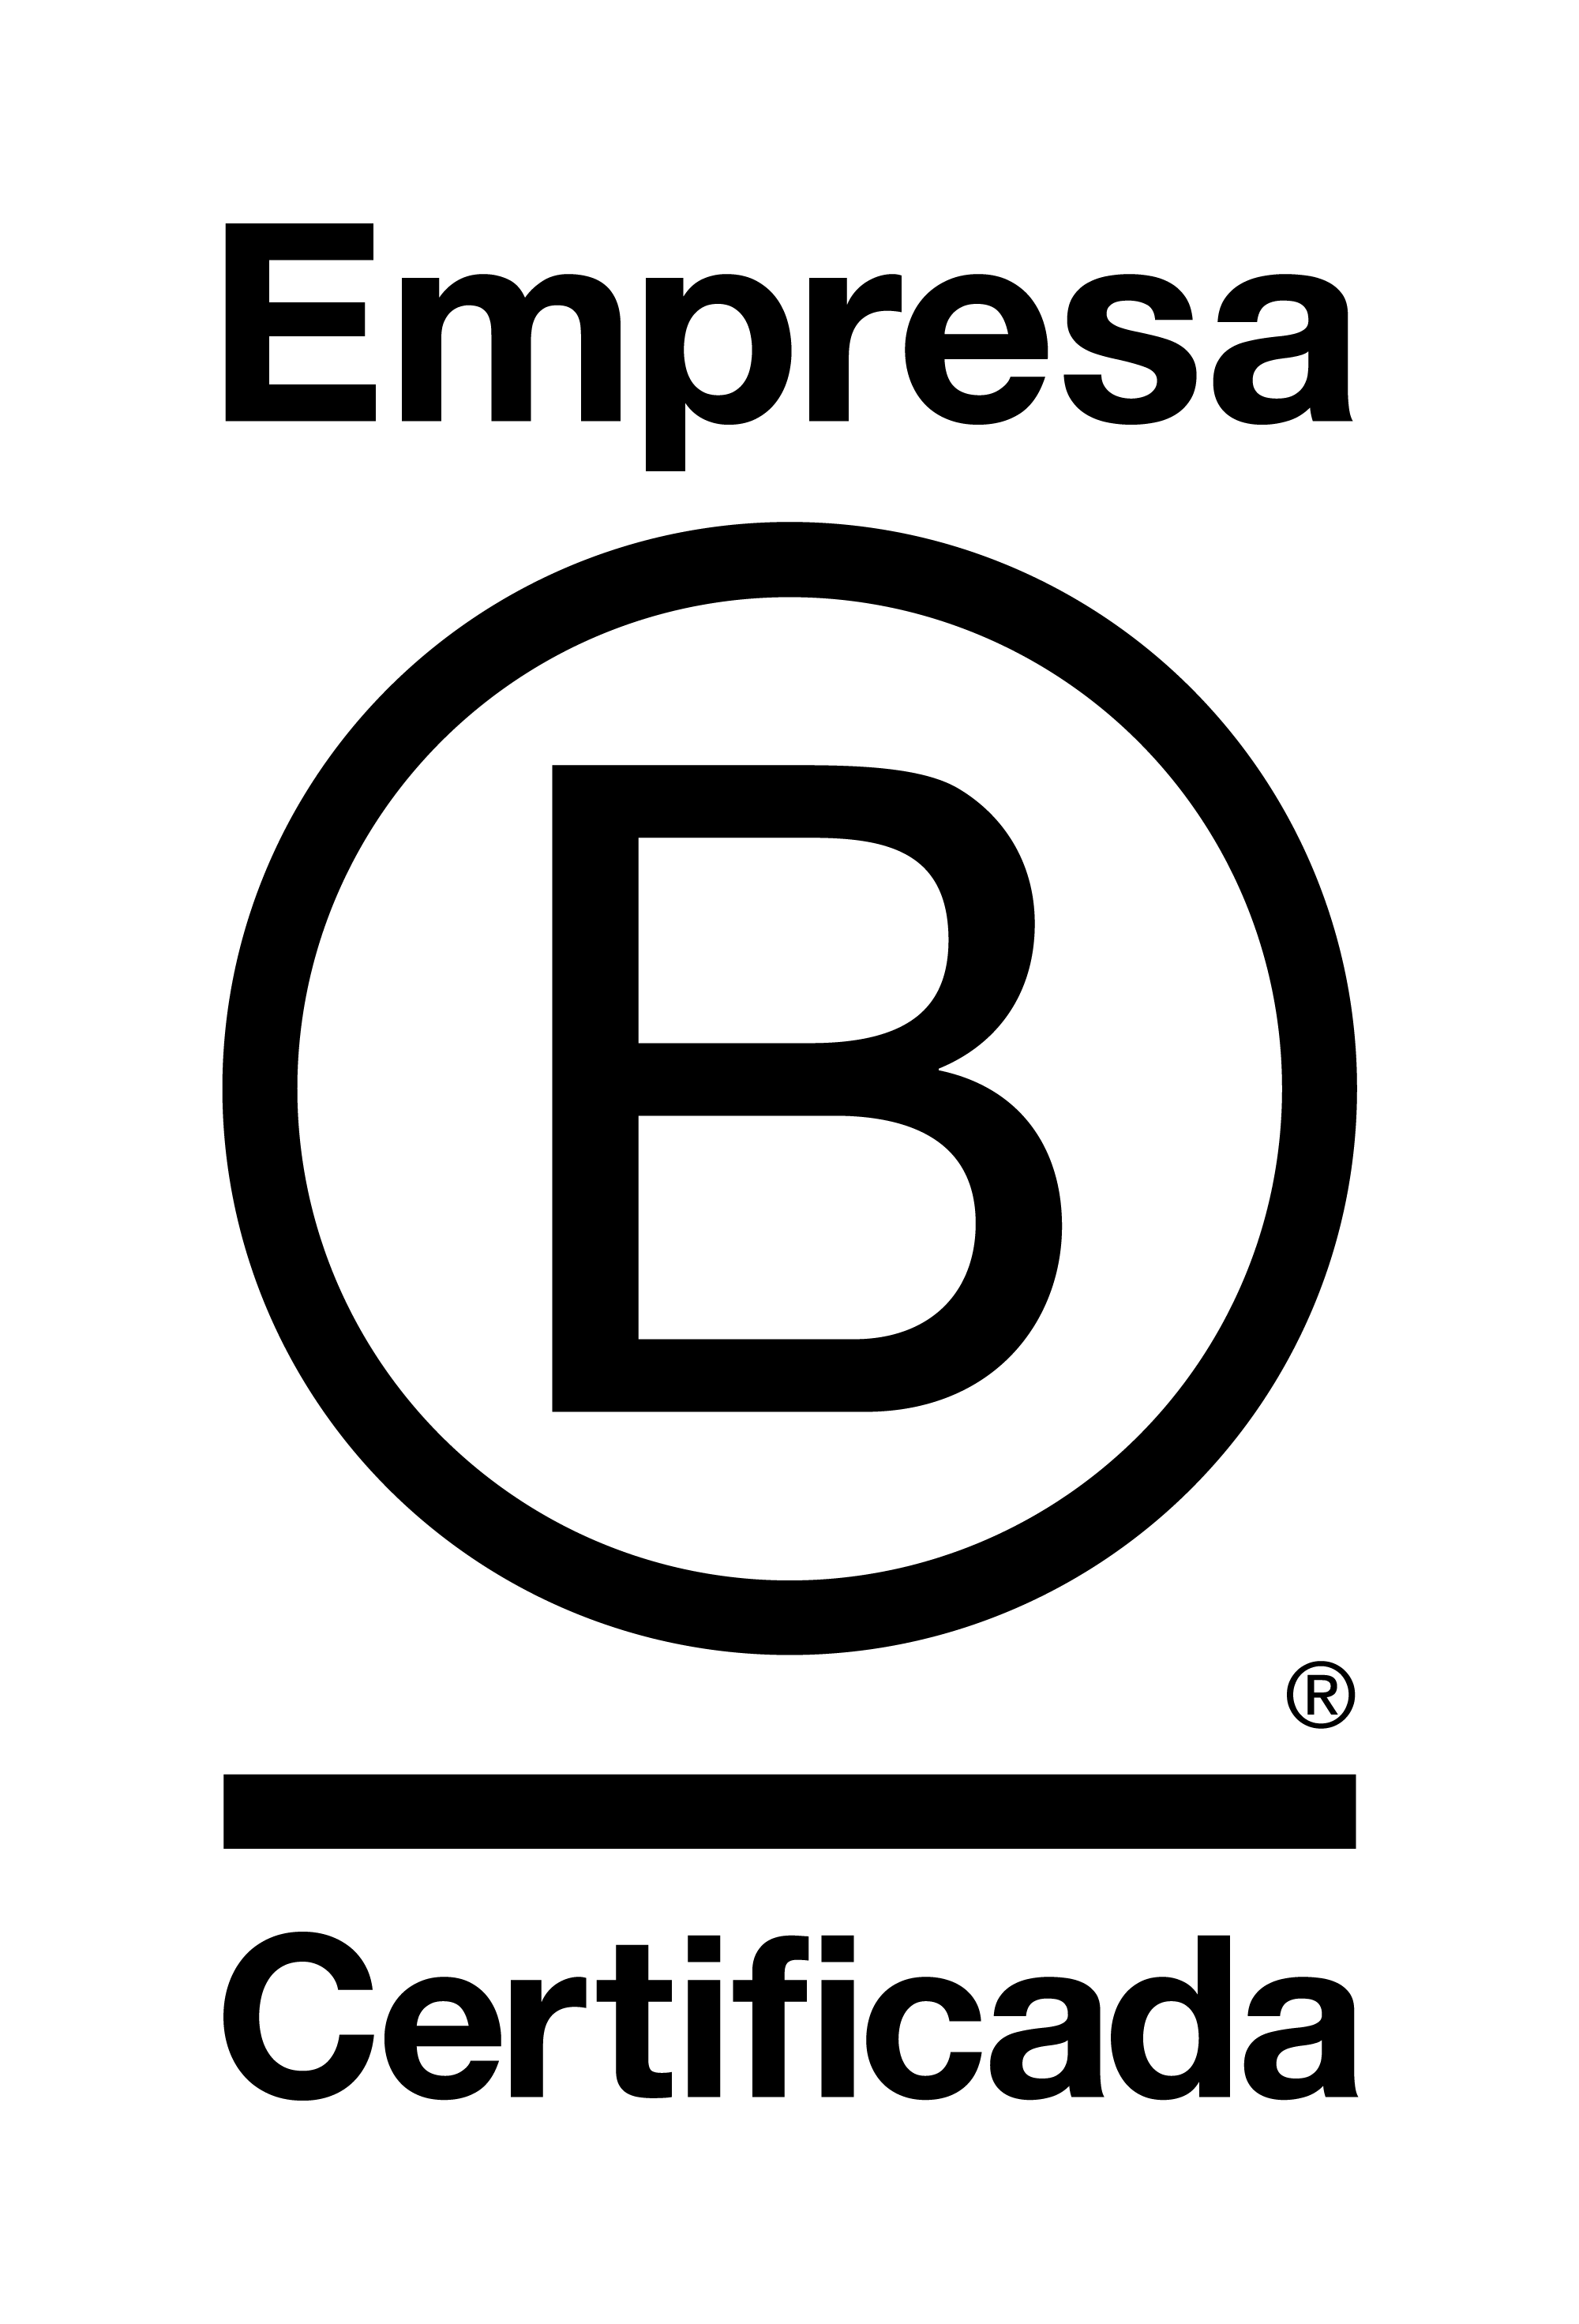 EmpresaBCertificada_Logo2021_Negro